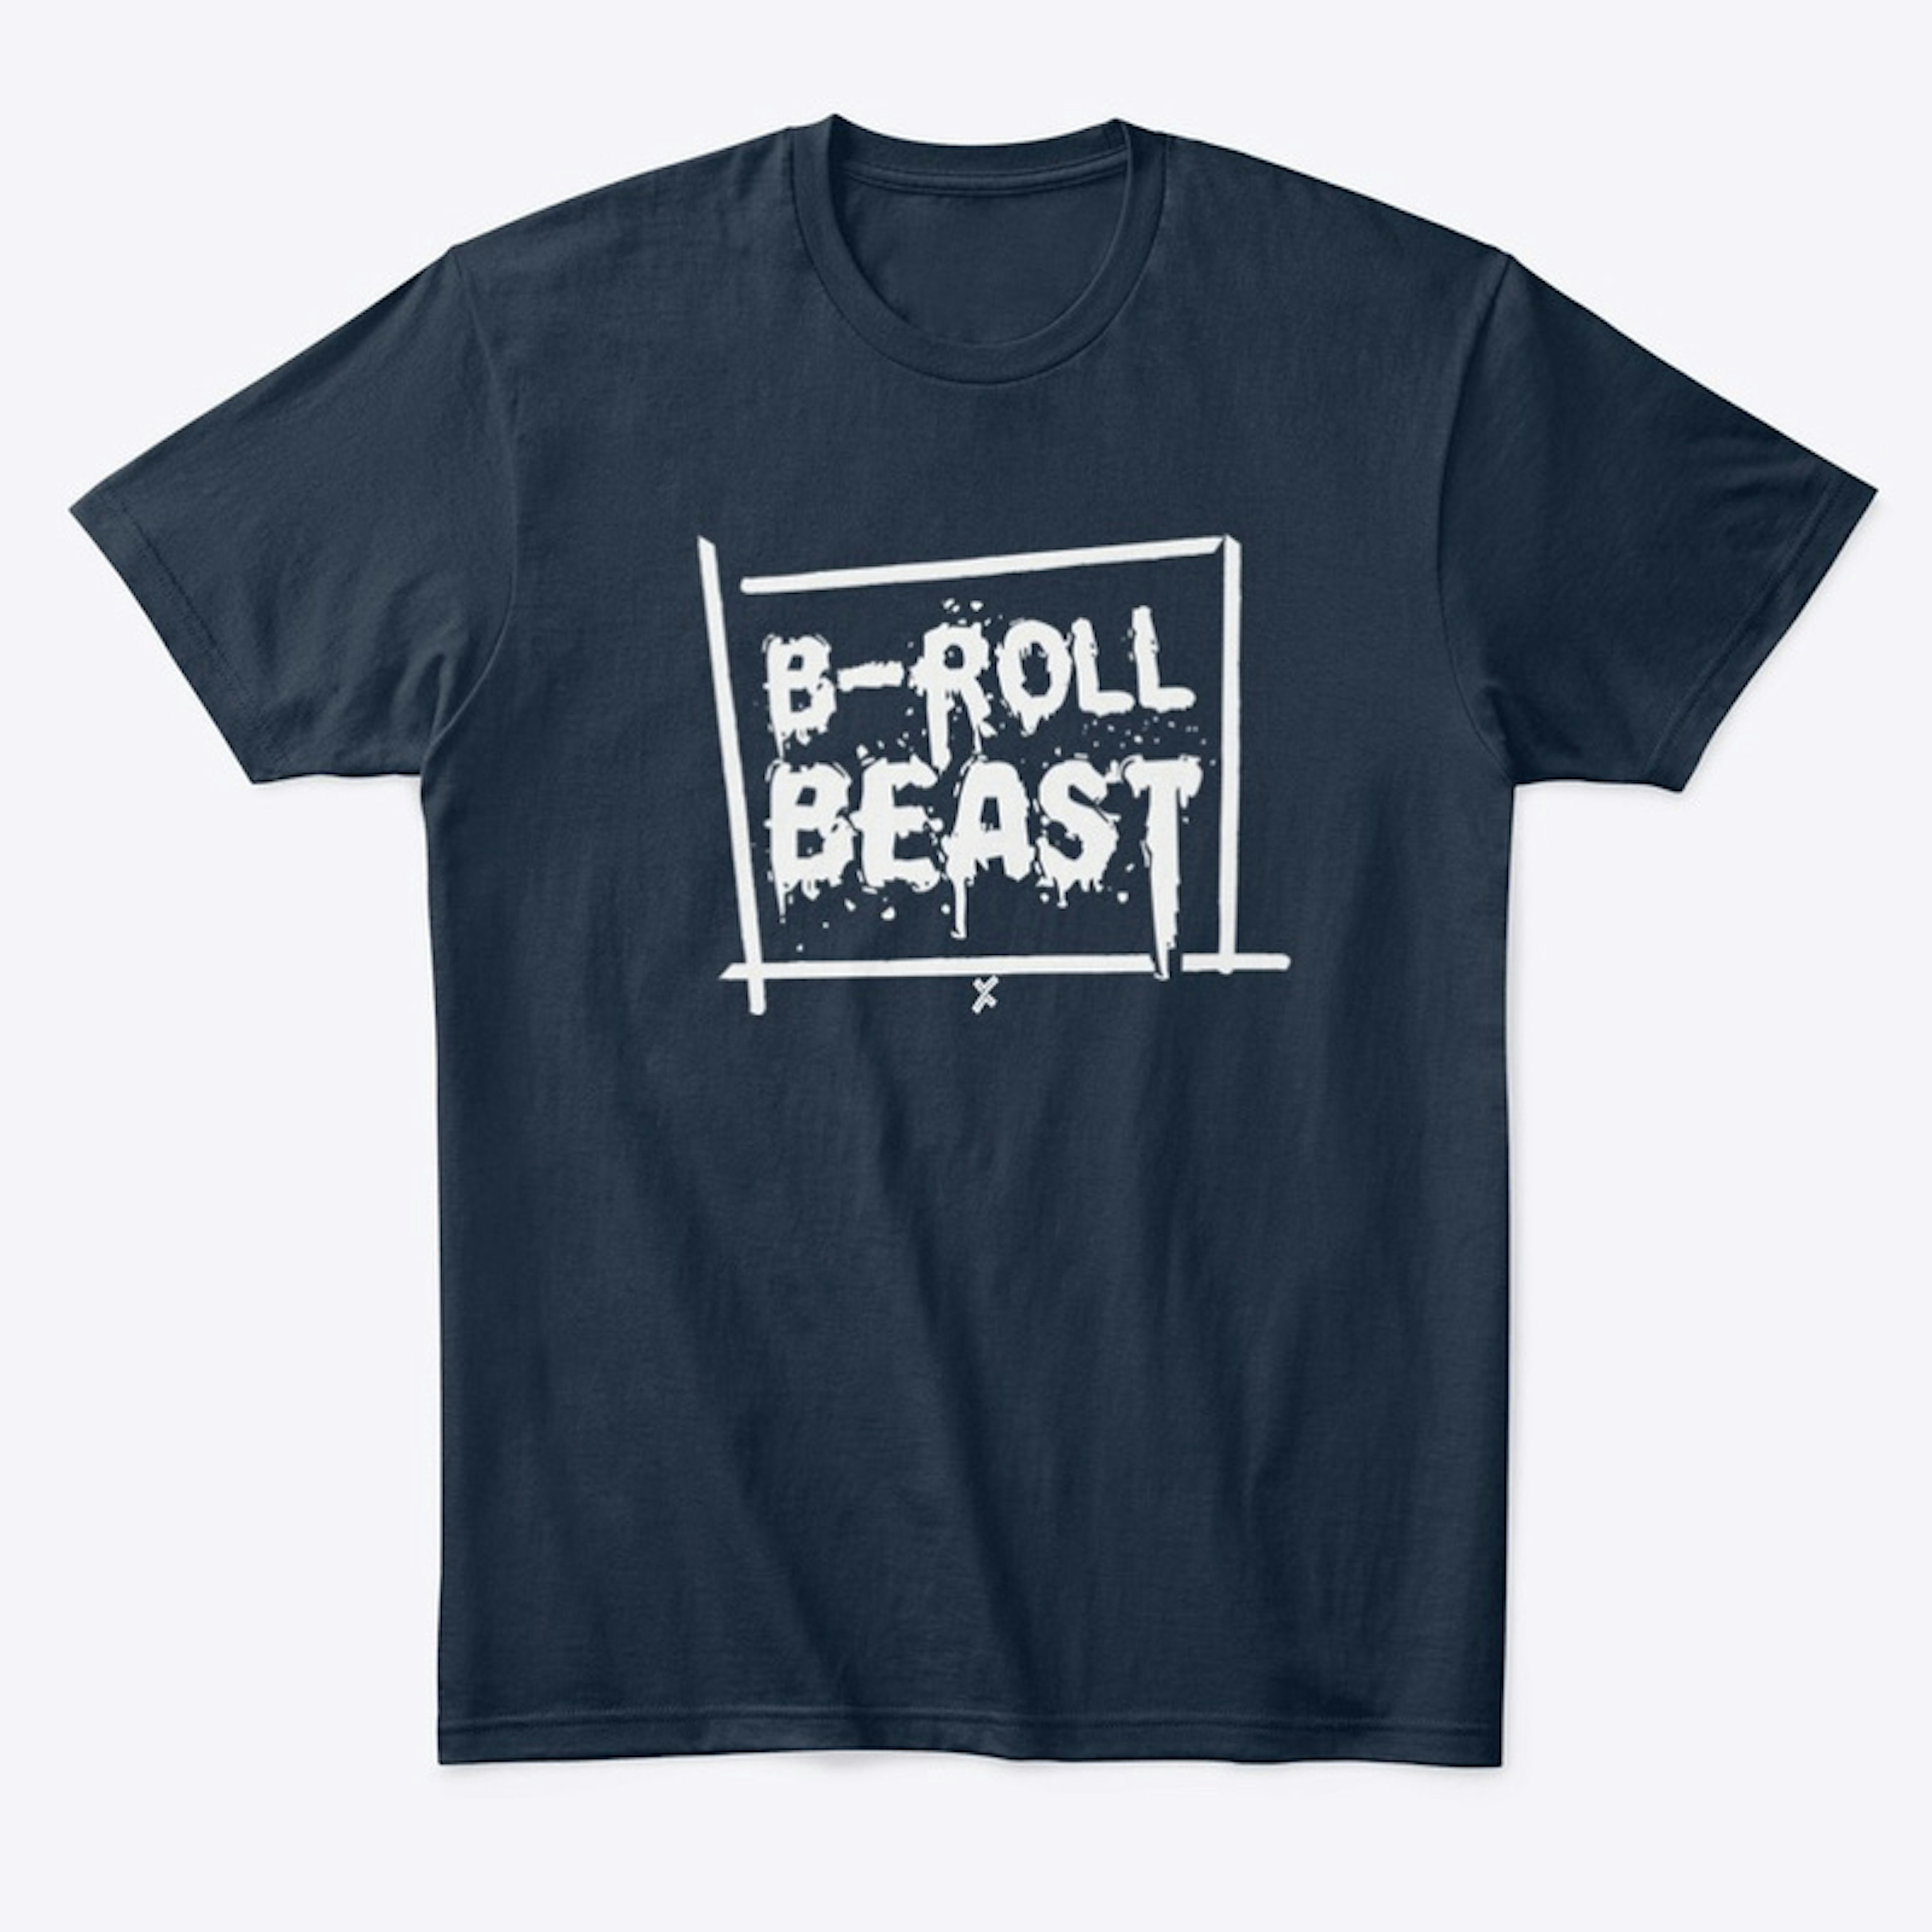 B-Roll Beast Tee